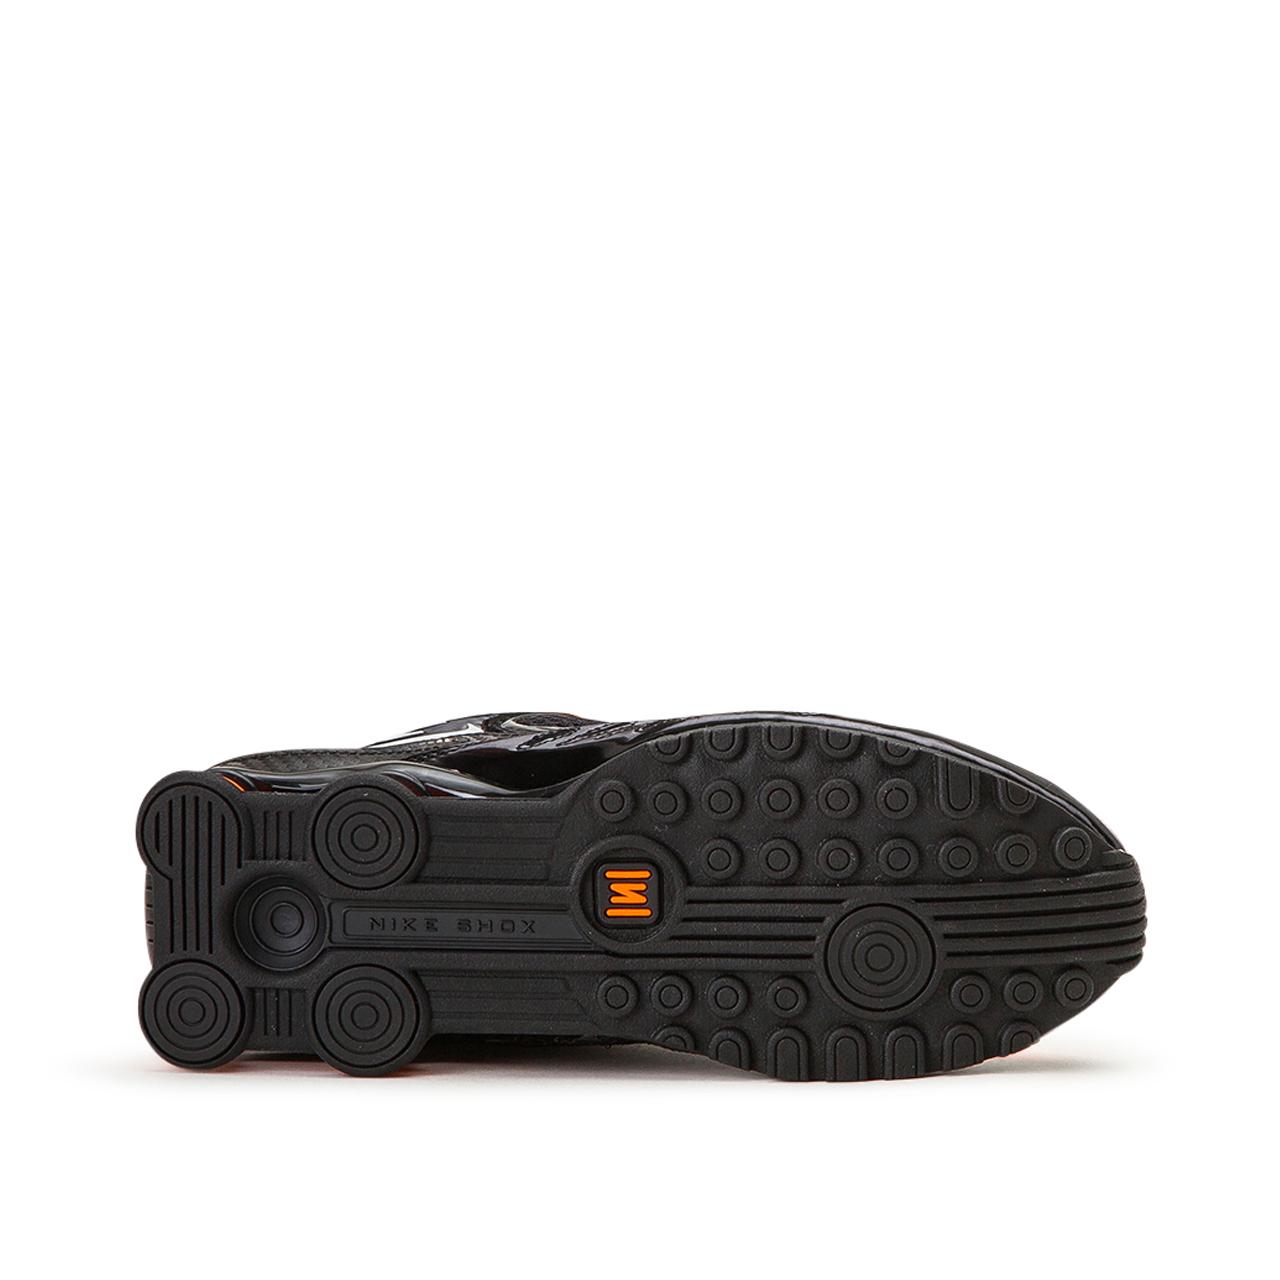 Nike Black Shox Enigma Sneakers - Lyst